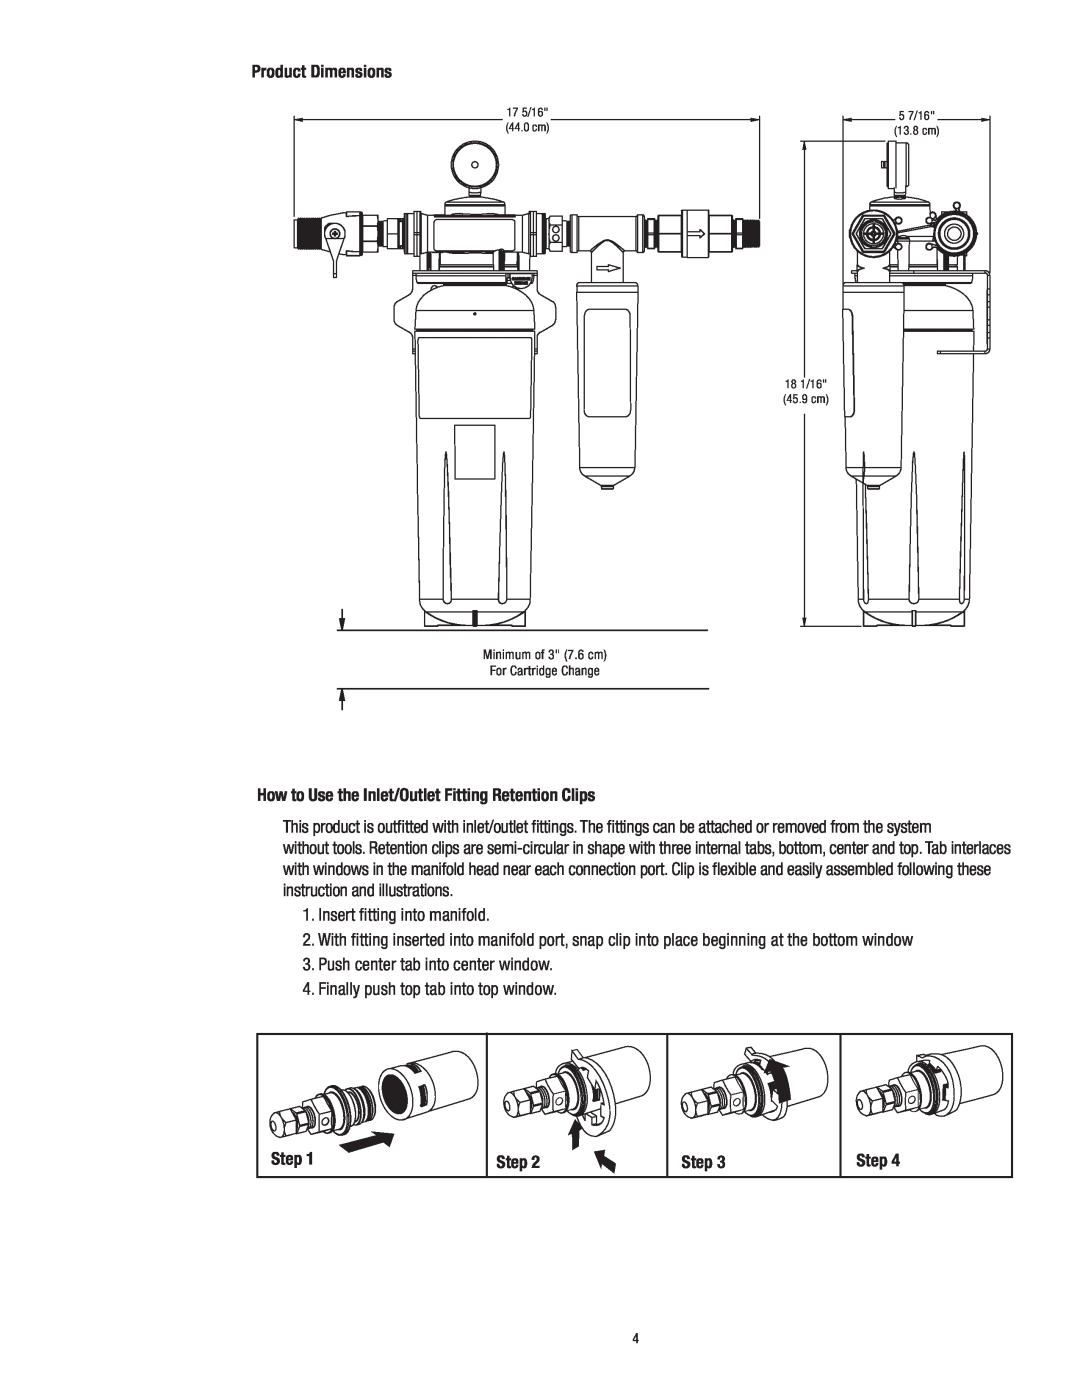 3M SF1XX instruction manual Step, Minimum of 3 7.6 cm For Cartridge Change 